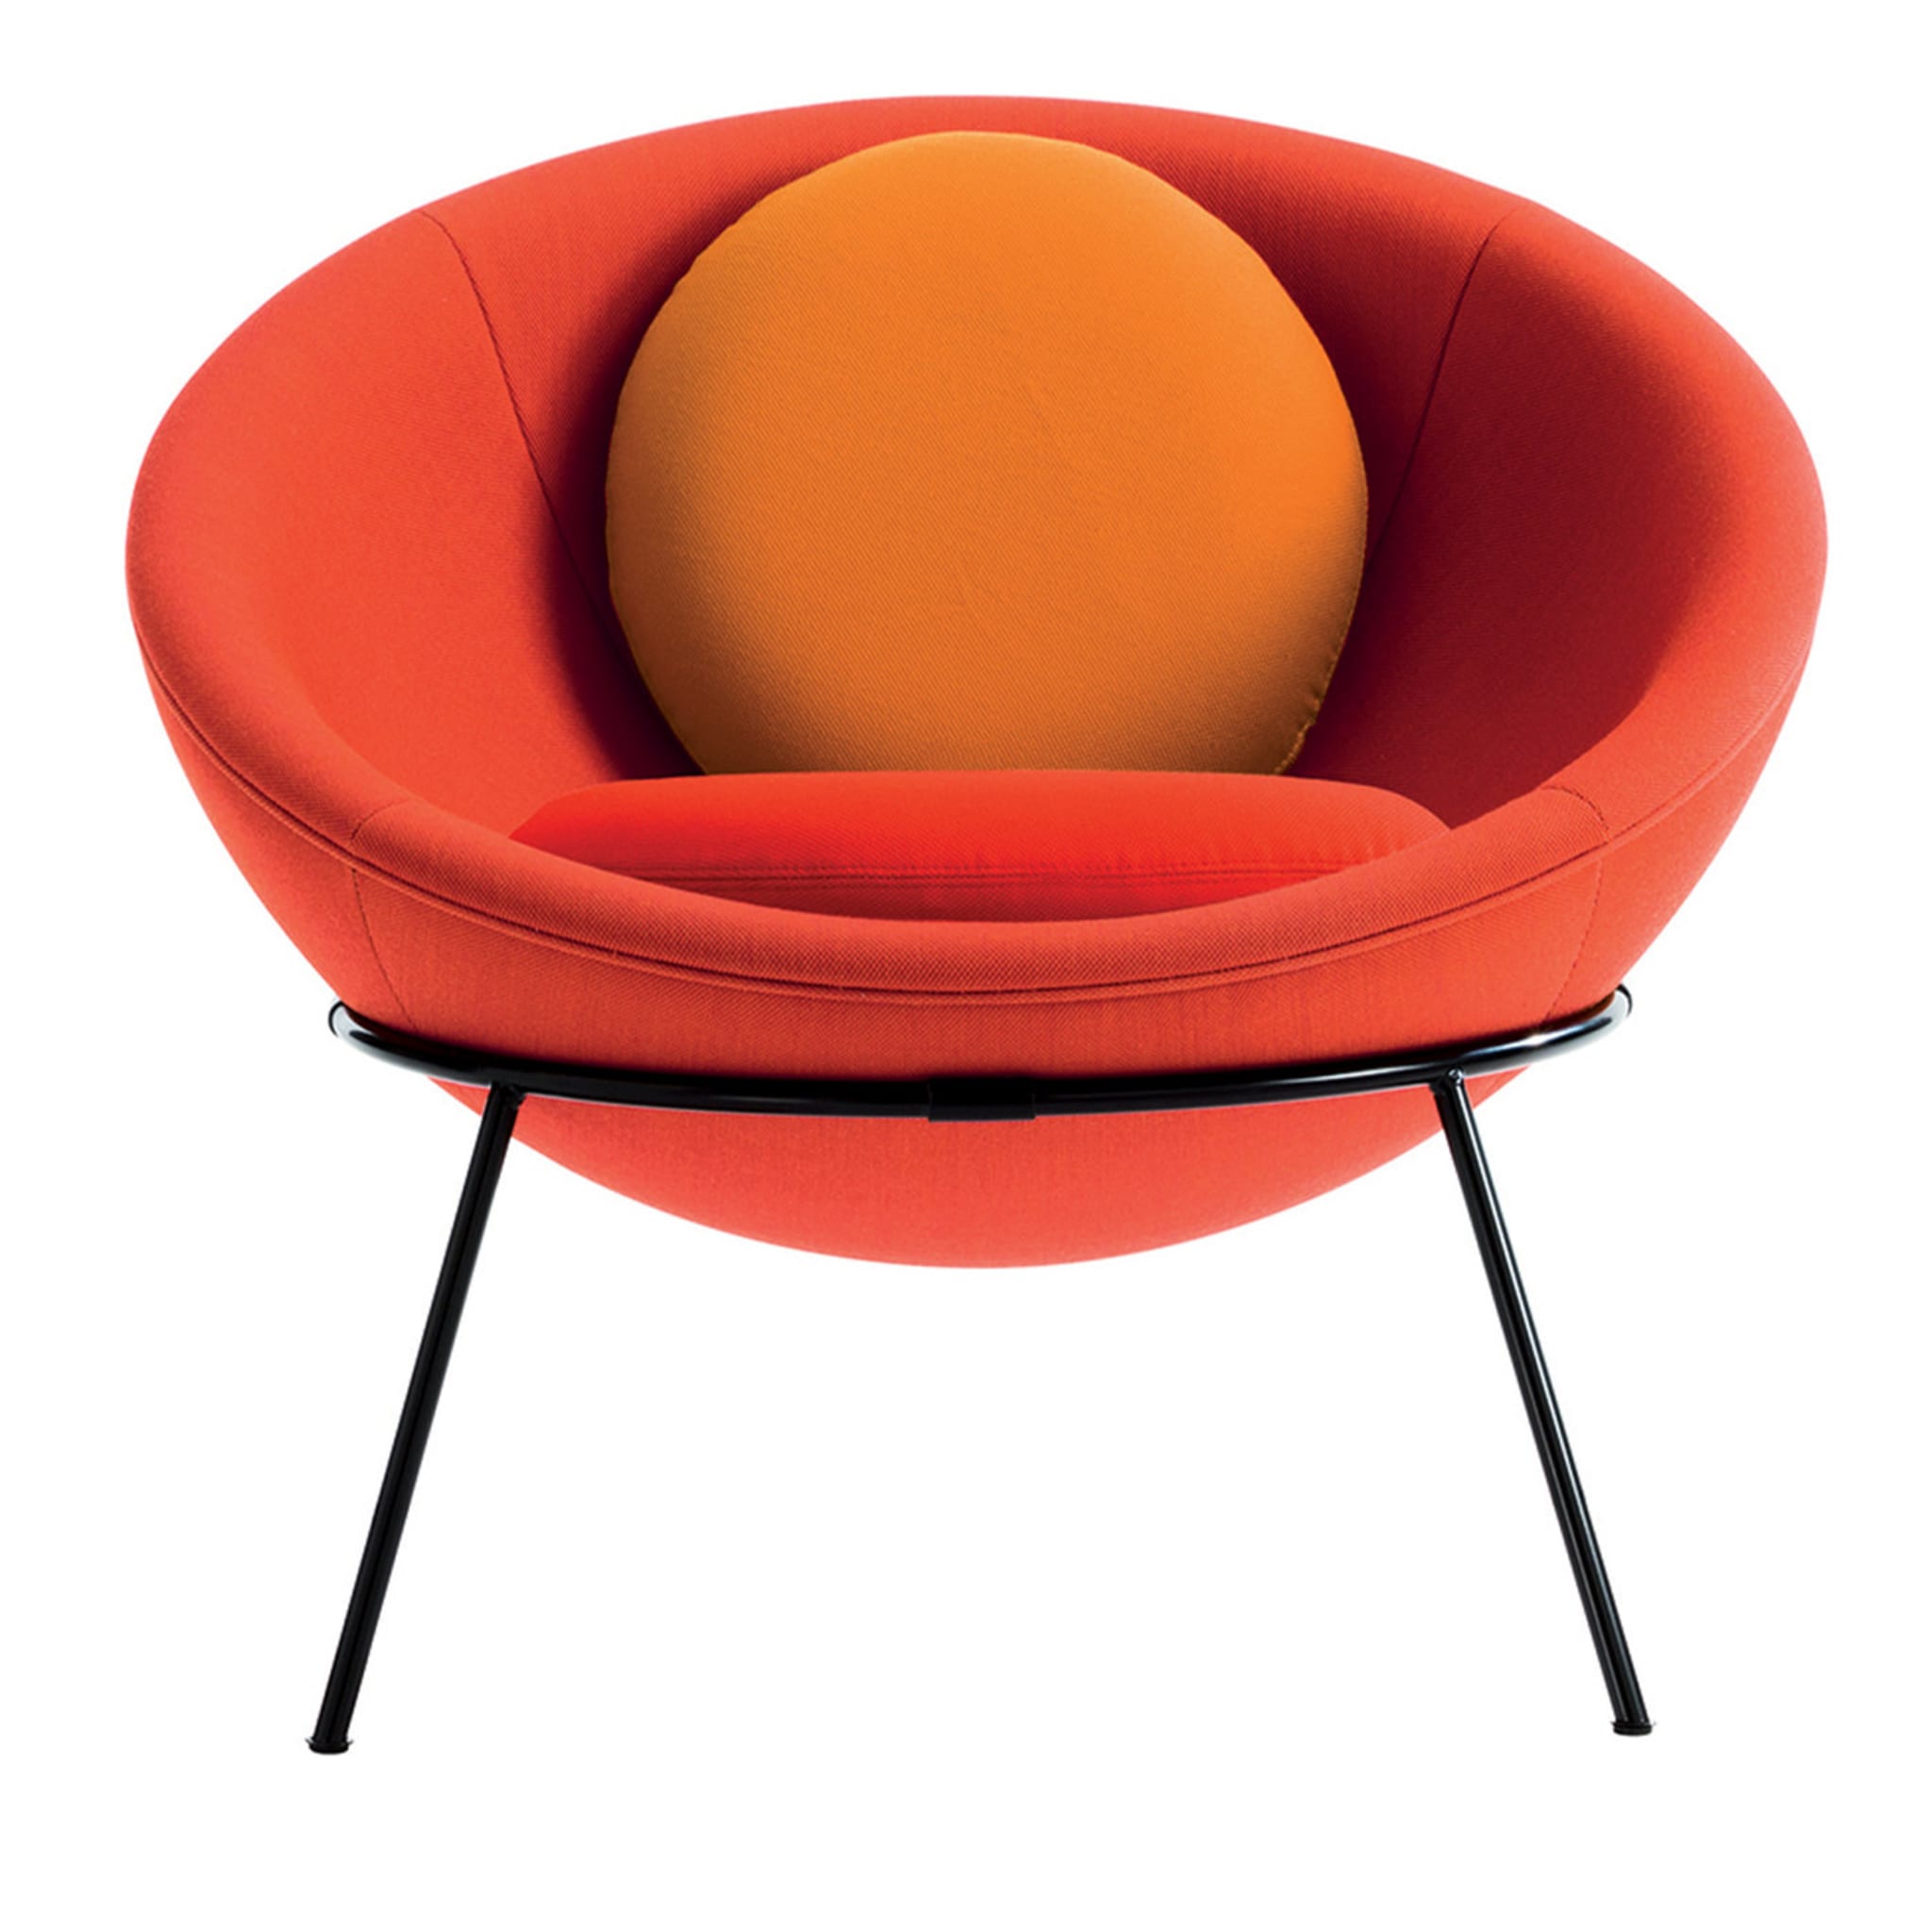 Bardi's Bowl Chair Orange Nuance - Main view